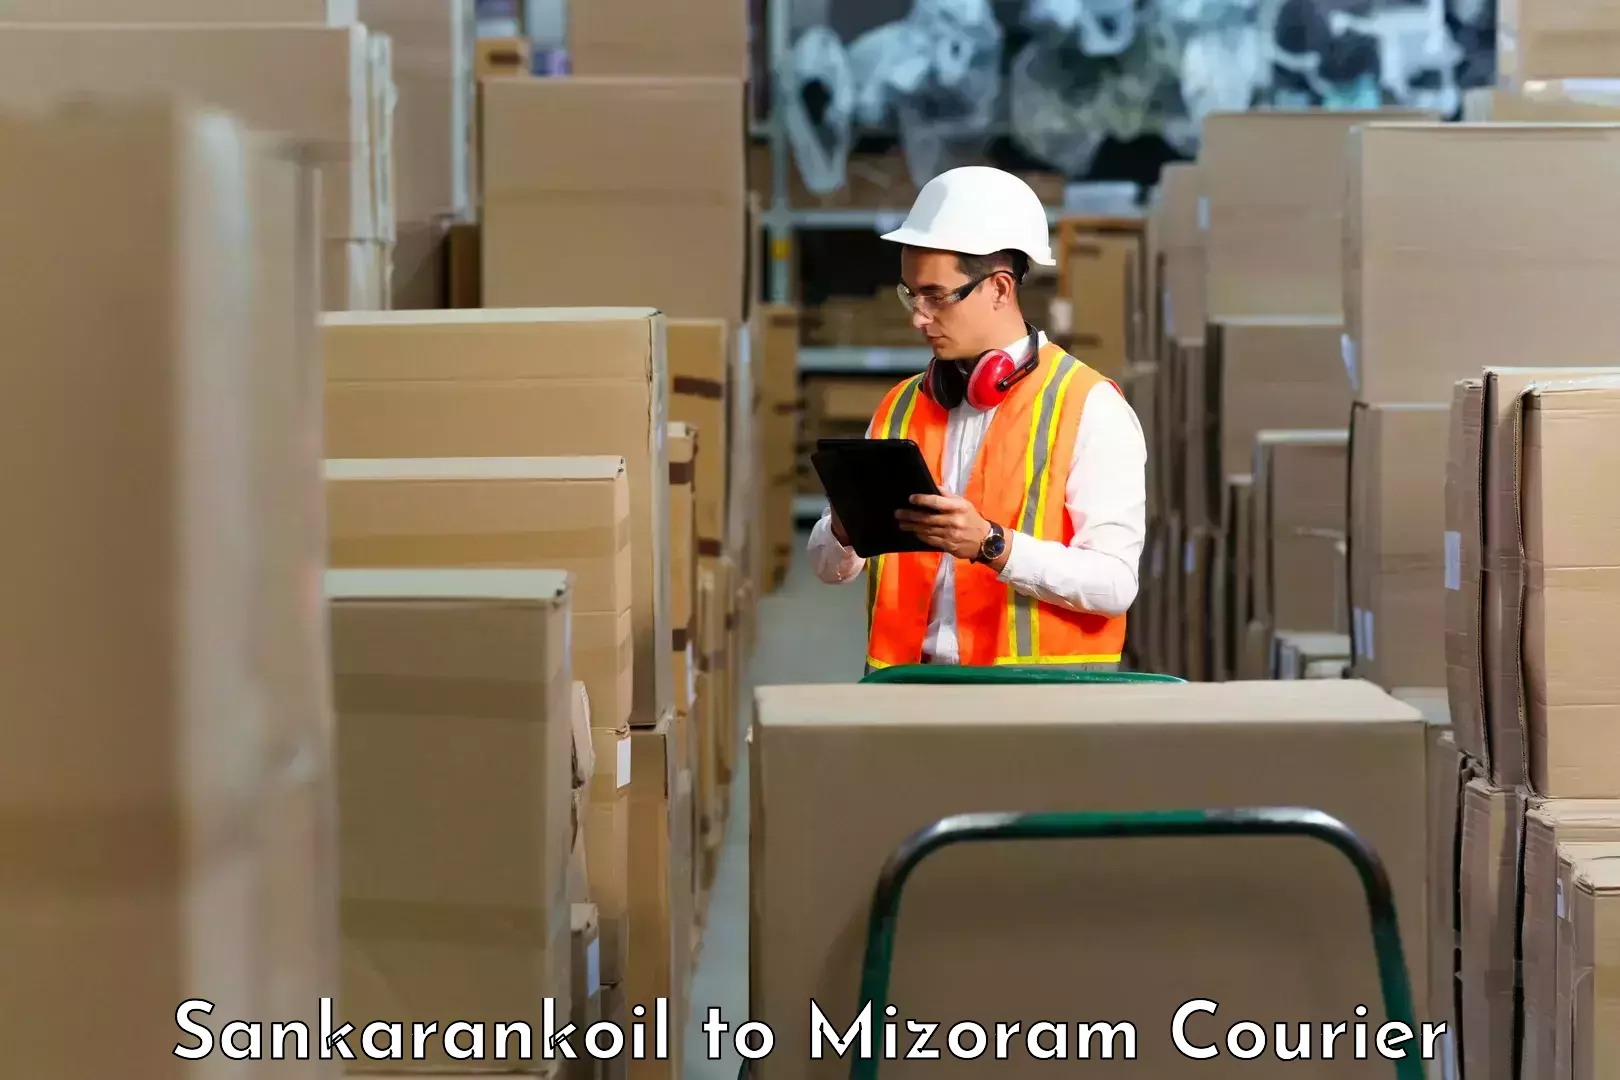 Reliable delivery network Sankarankoil to Mizoram